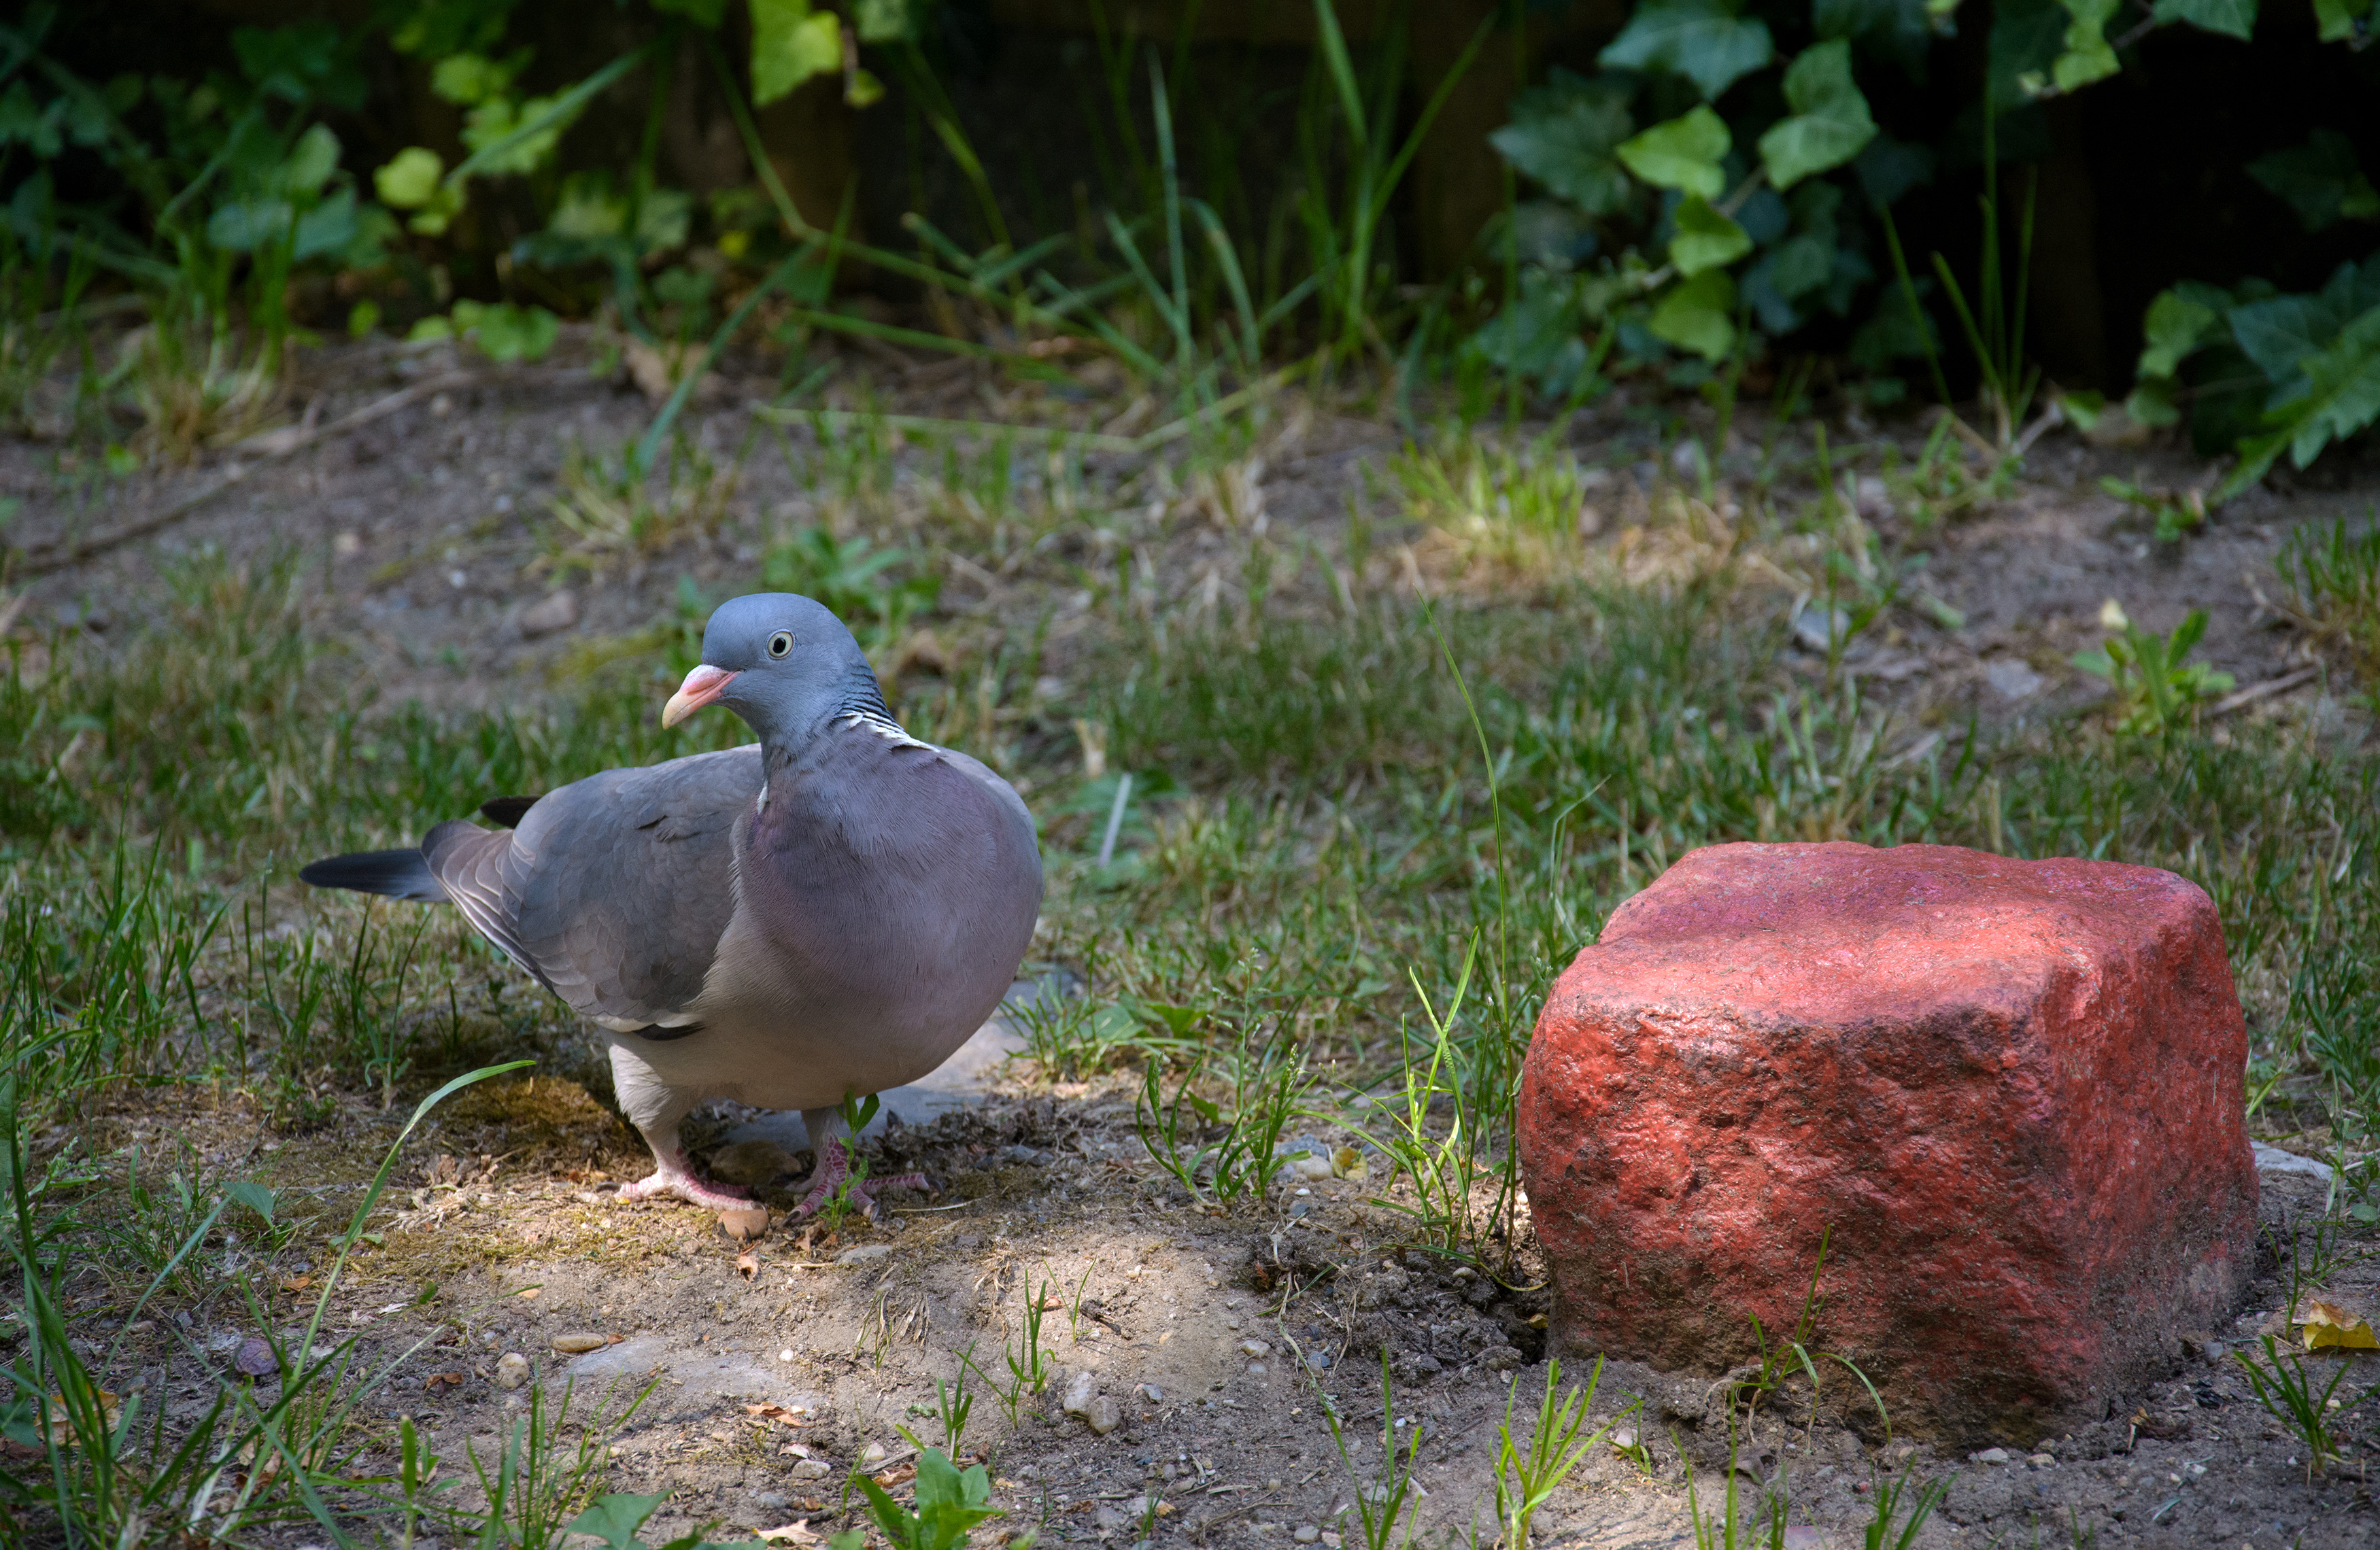 Free Image: Cute Pigeon | Libreshot Public Domain Photos